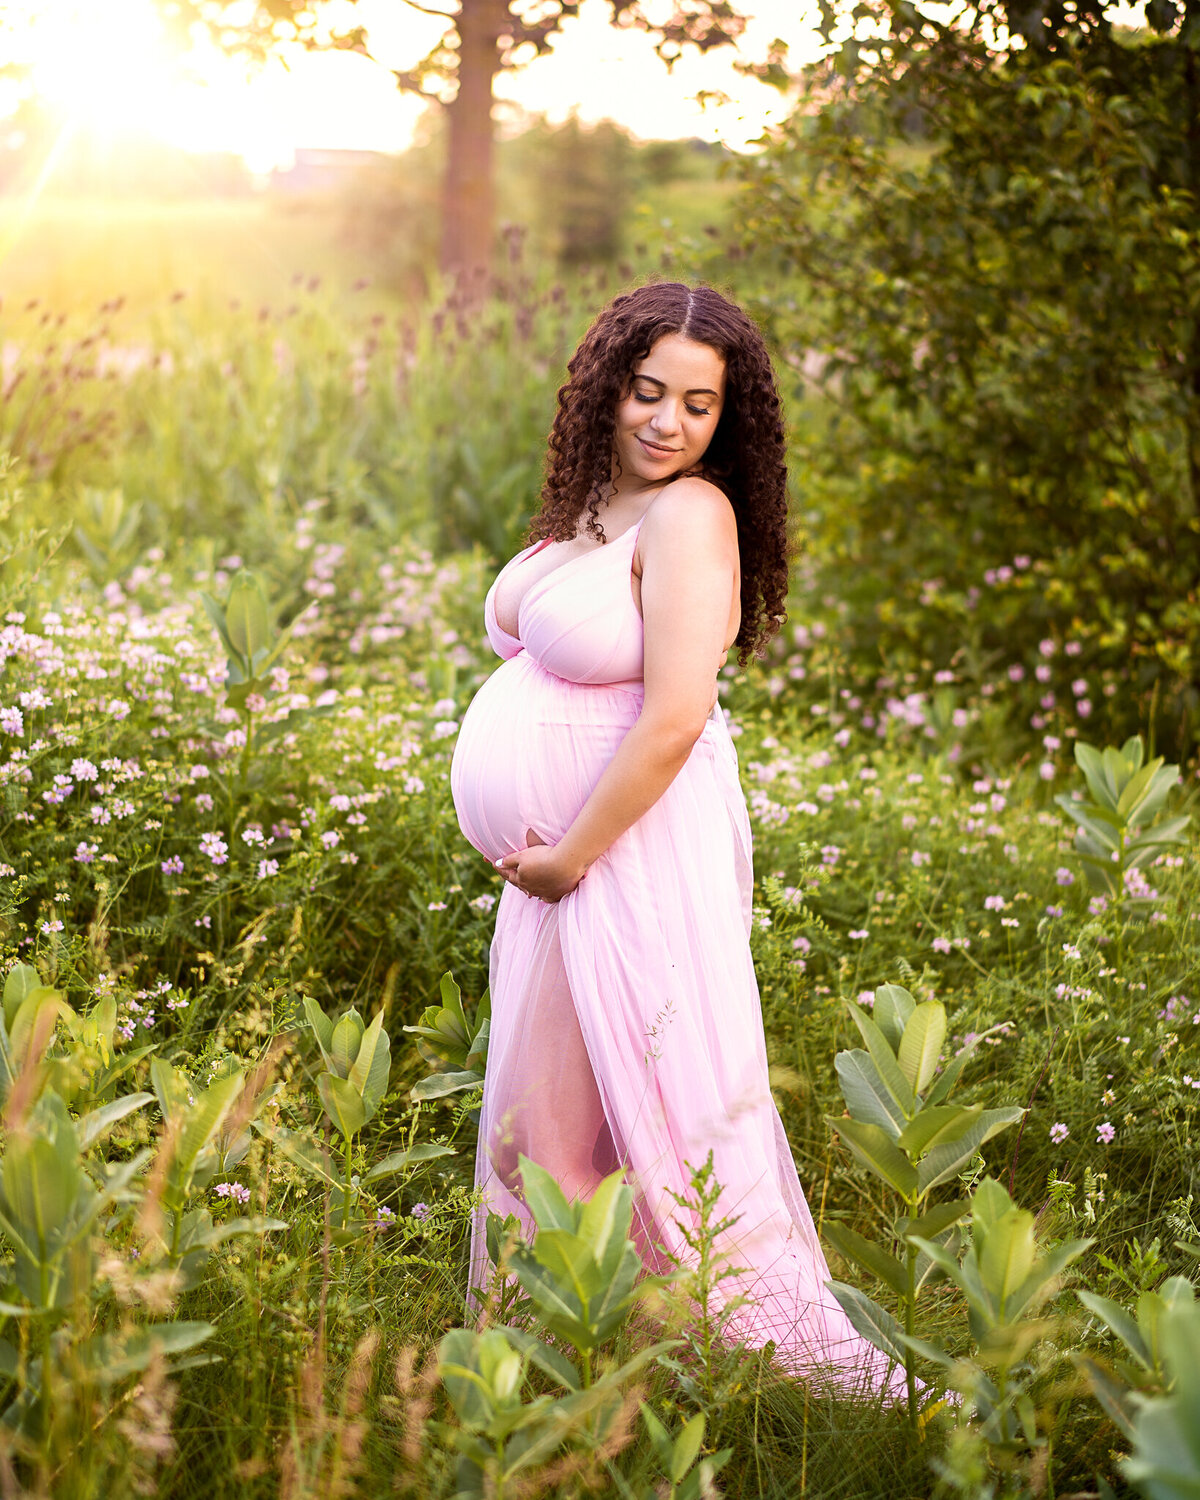 akron-outdoor-maternity-photographer-kendrahdamis (1 of 2)-2